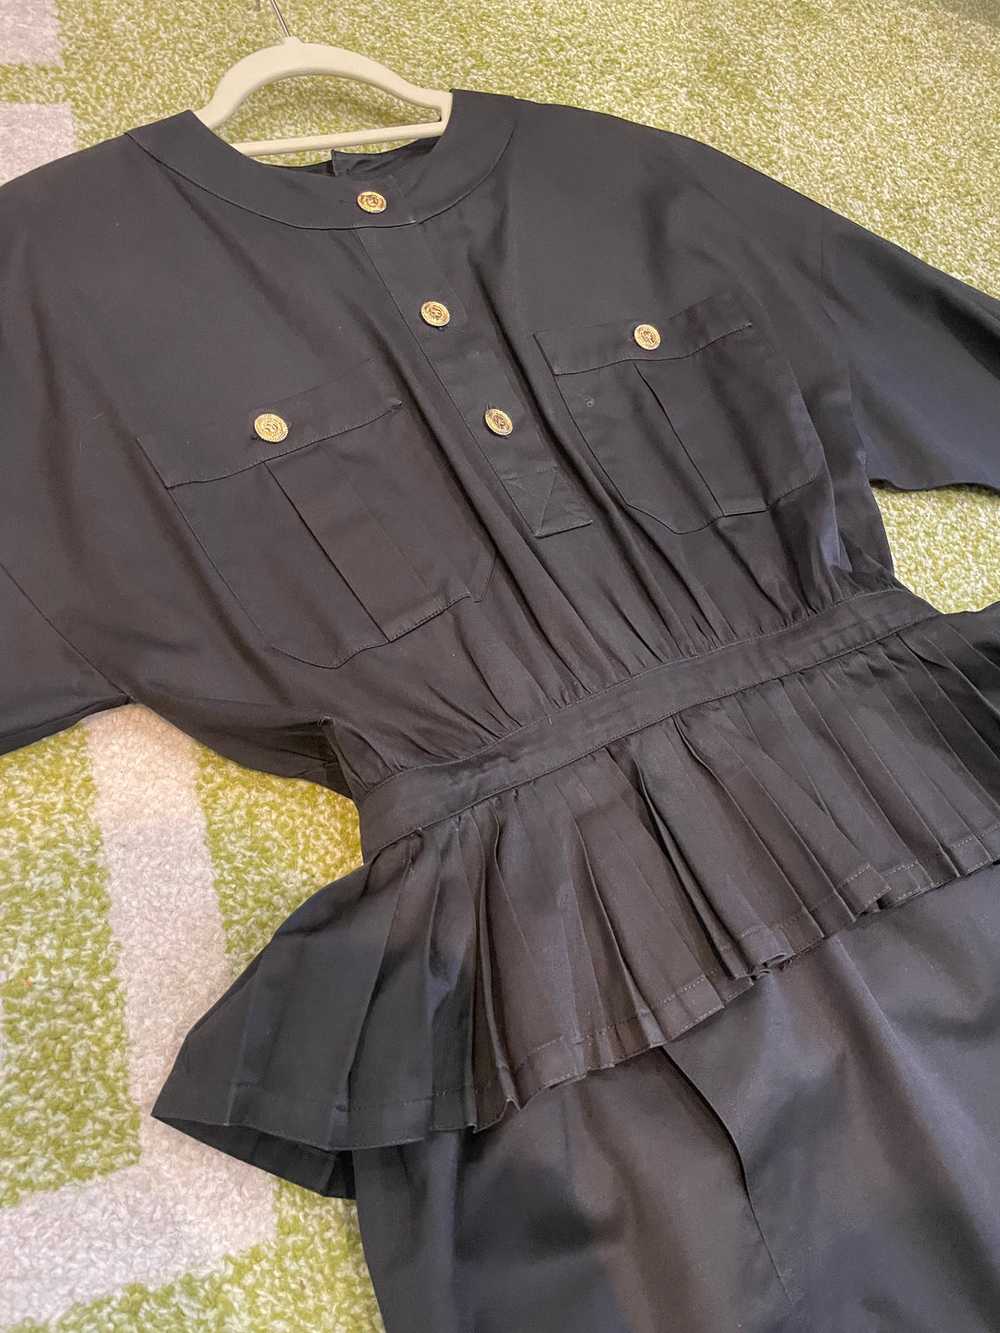 Chanel Black Cotton Dress (Size 4) - image 4